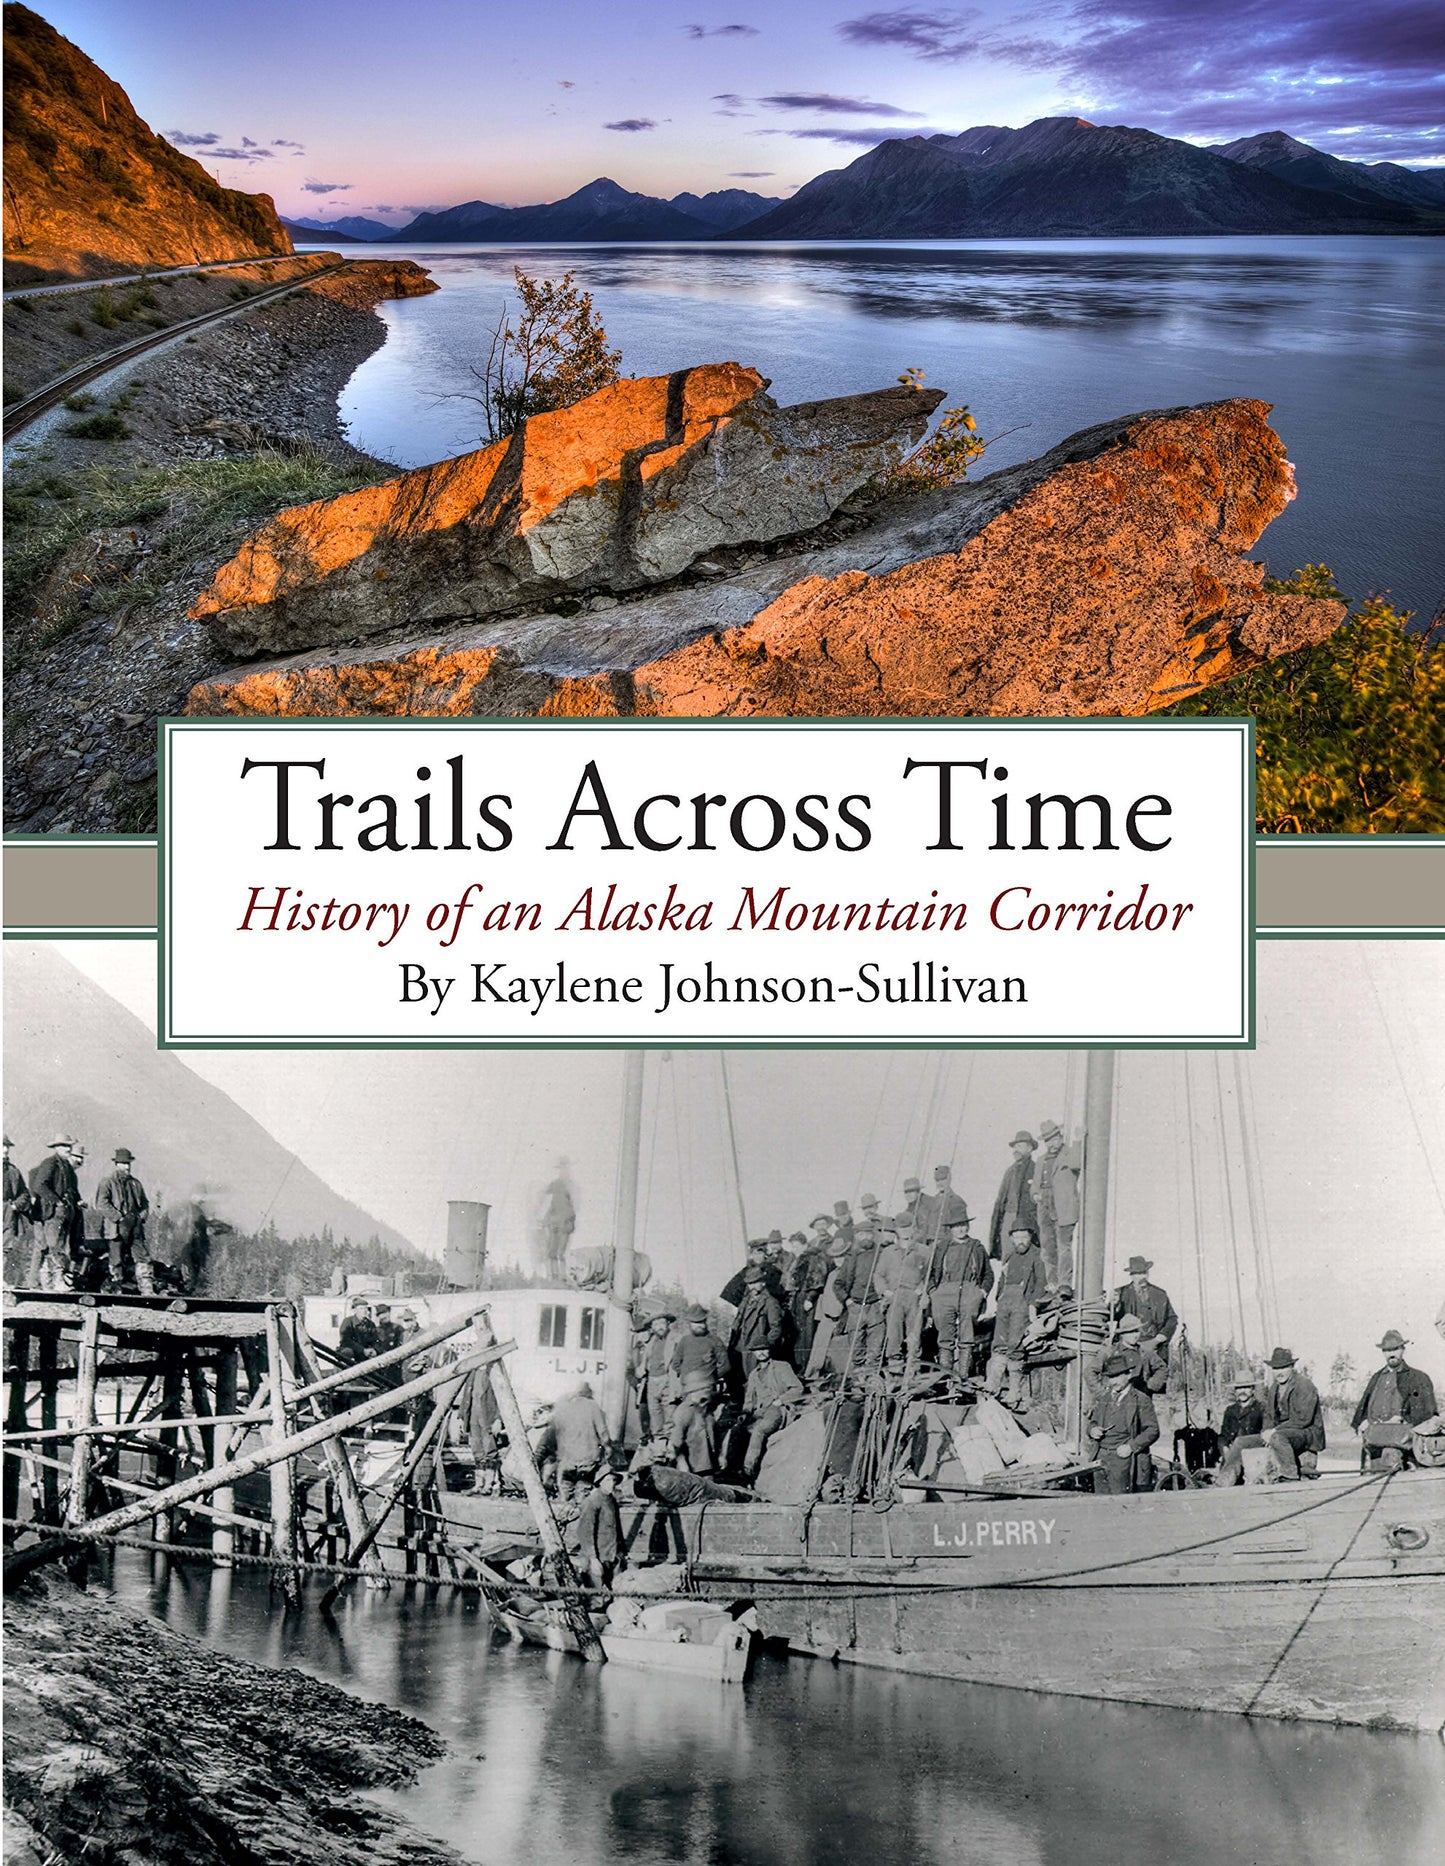 Trails Across Time: History of an Alaska Mountain Corridor by Kaylene Johnson-Sullivan (Second Edition)